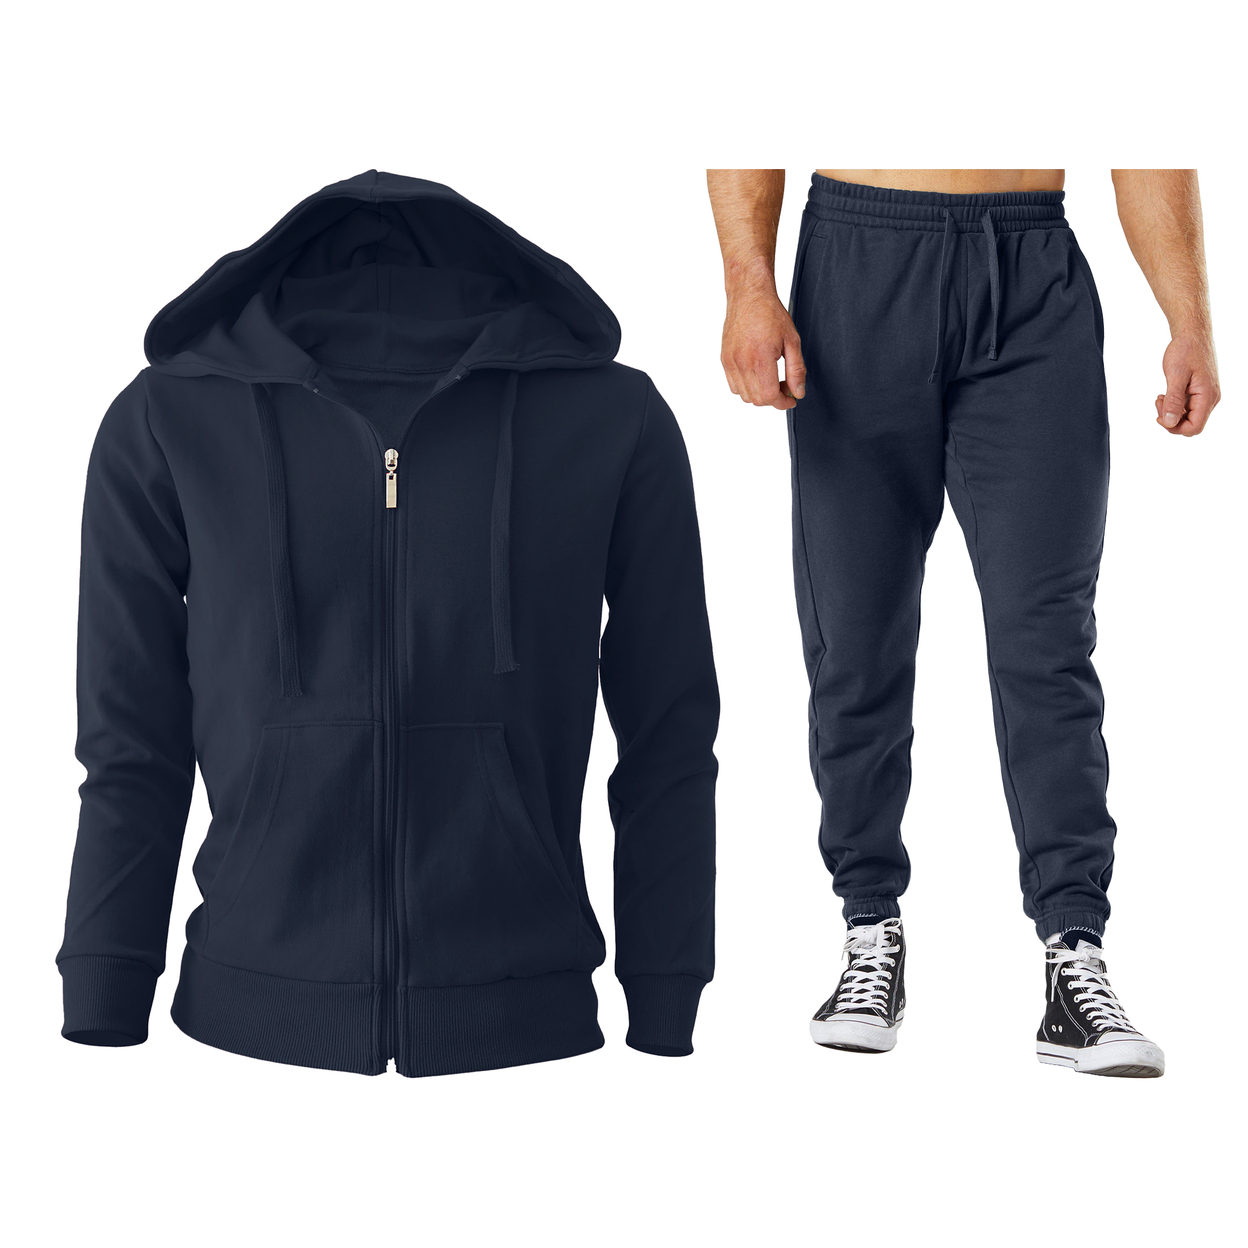 2-Piece: Men's Winter Warm Cozy Athletic Multi-Pockets BIG & TALL Sweatsuit Set - Navy, X-large